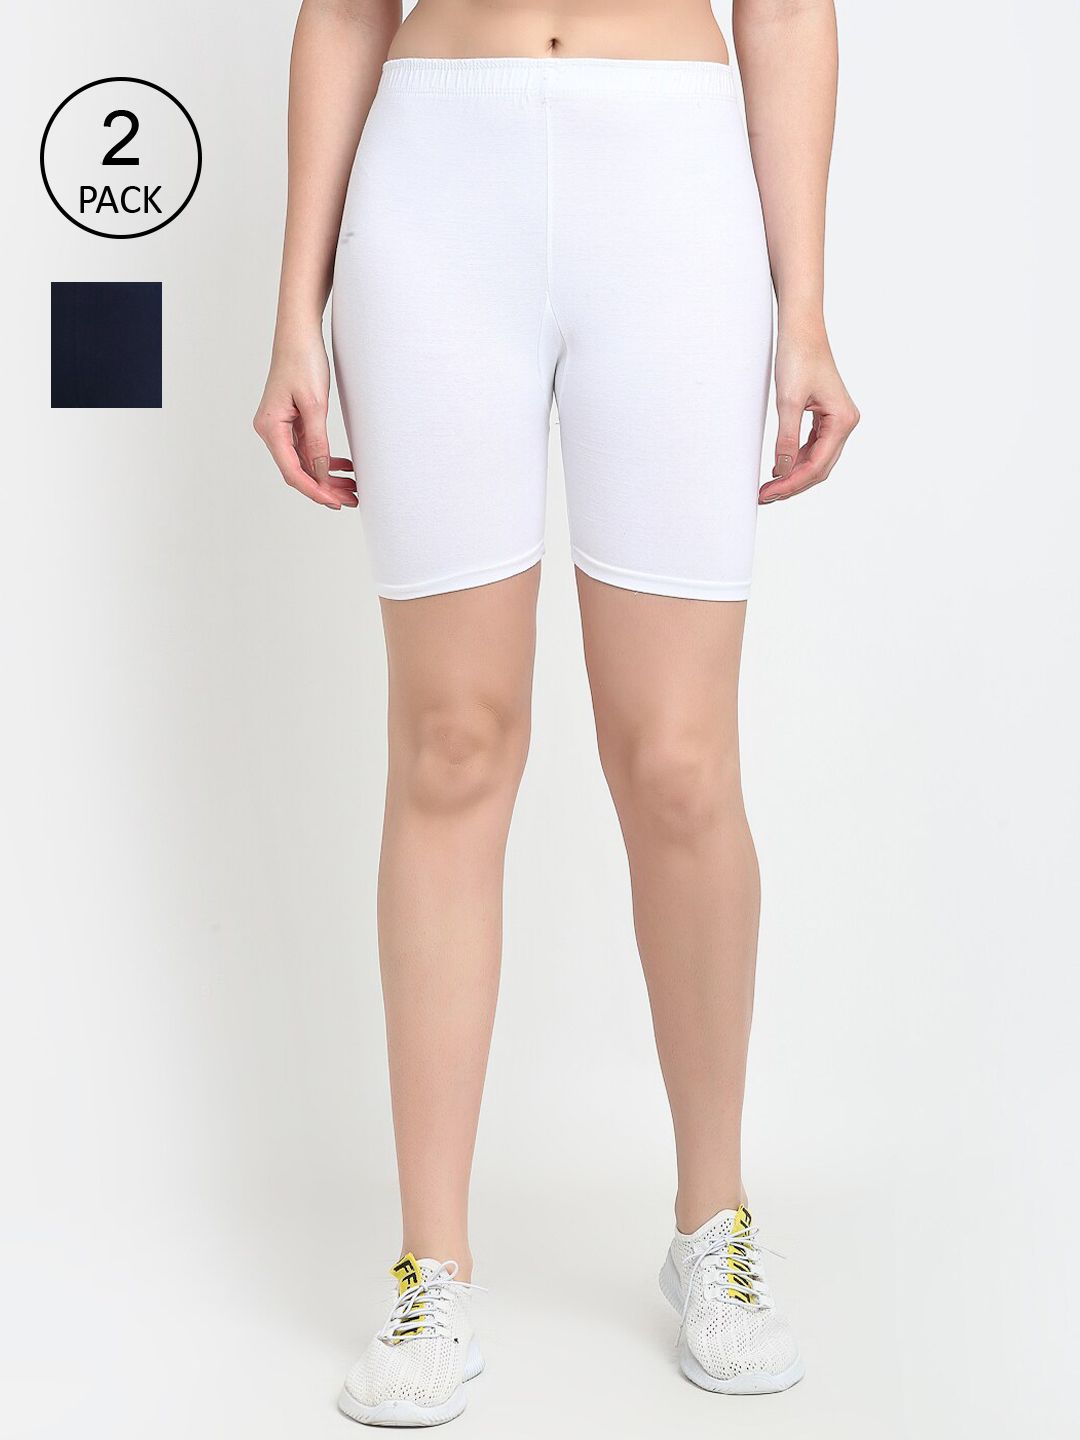 GRACIT Women White & Black Set Of 2 Biker Shorts Price in India